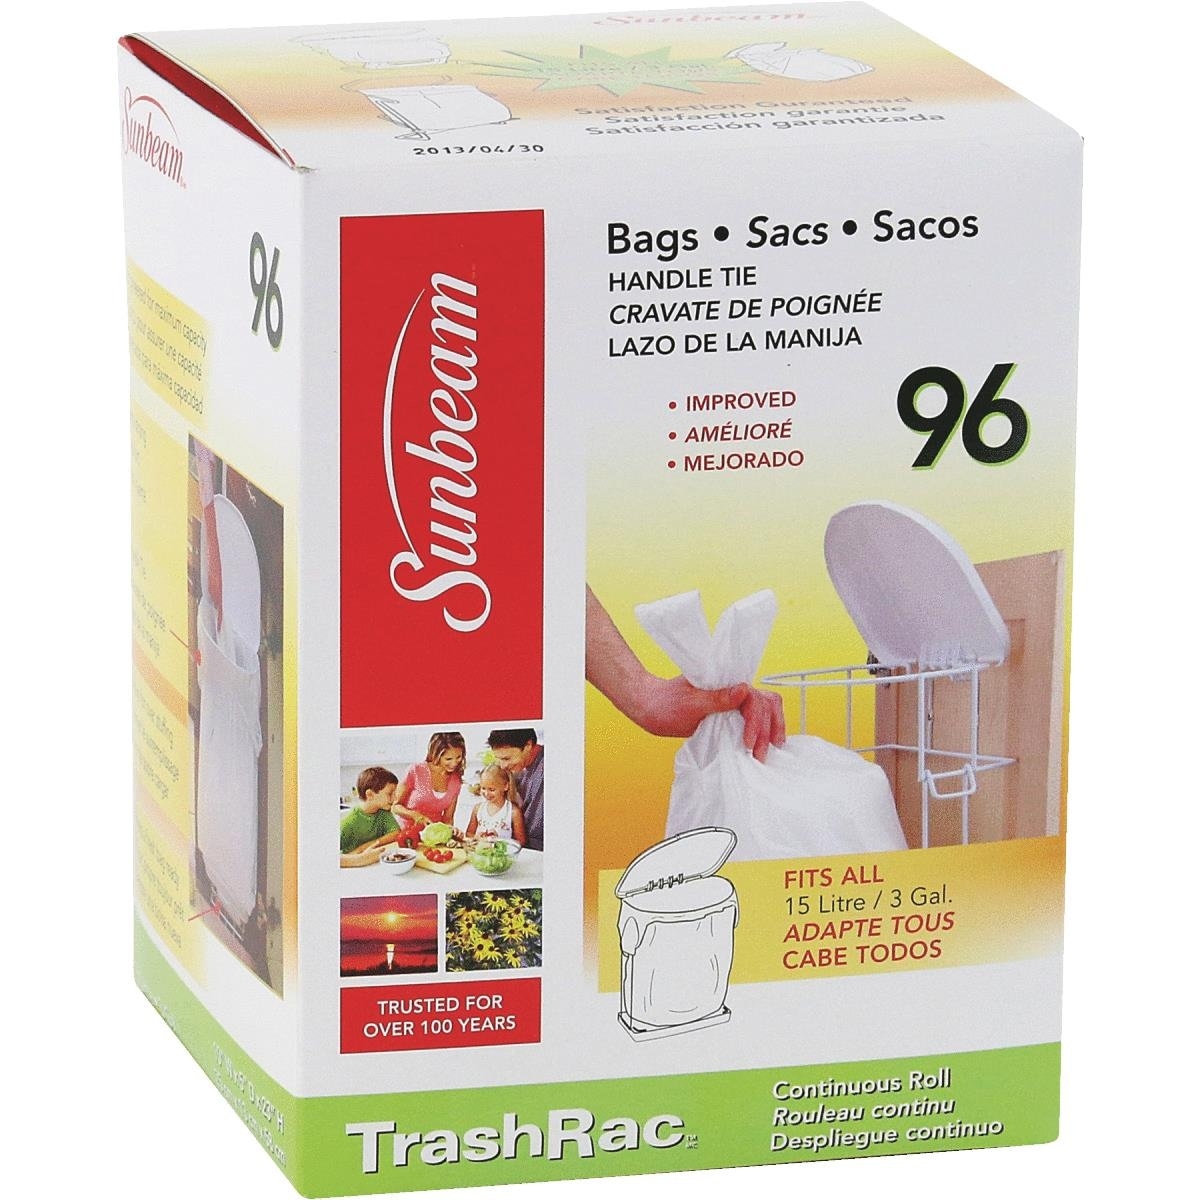 TrashRac 3 Gallon Trash Bags 24 Pack